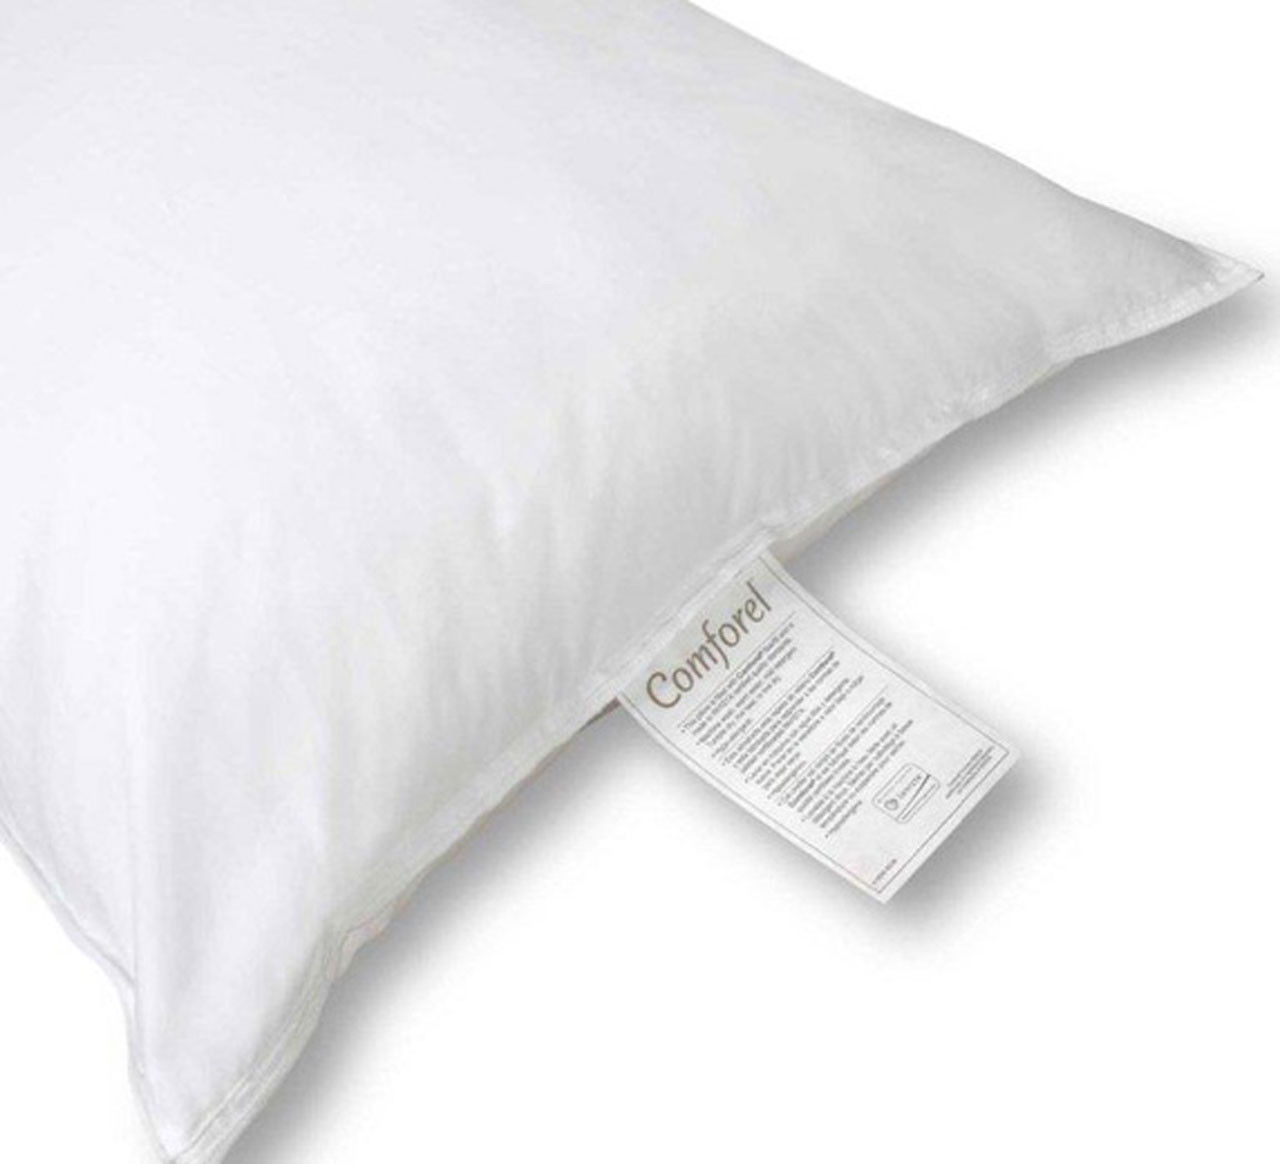 What makes the Comforel® Gusset Hotel Pillow unique?